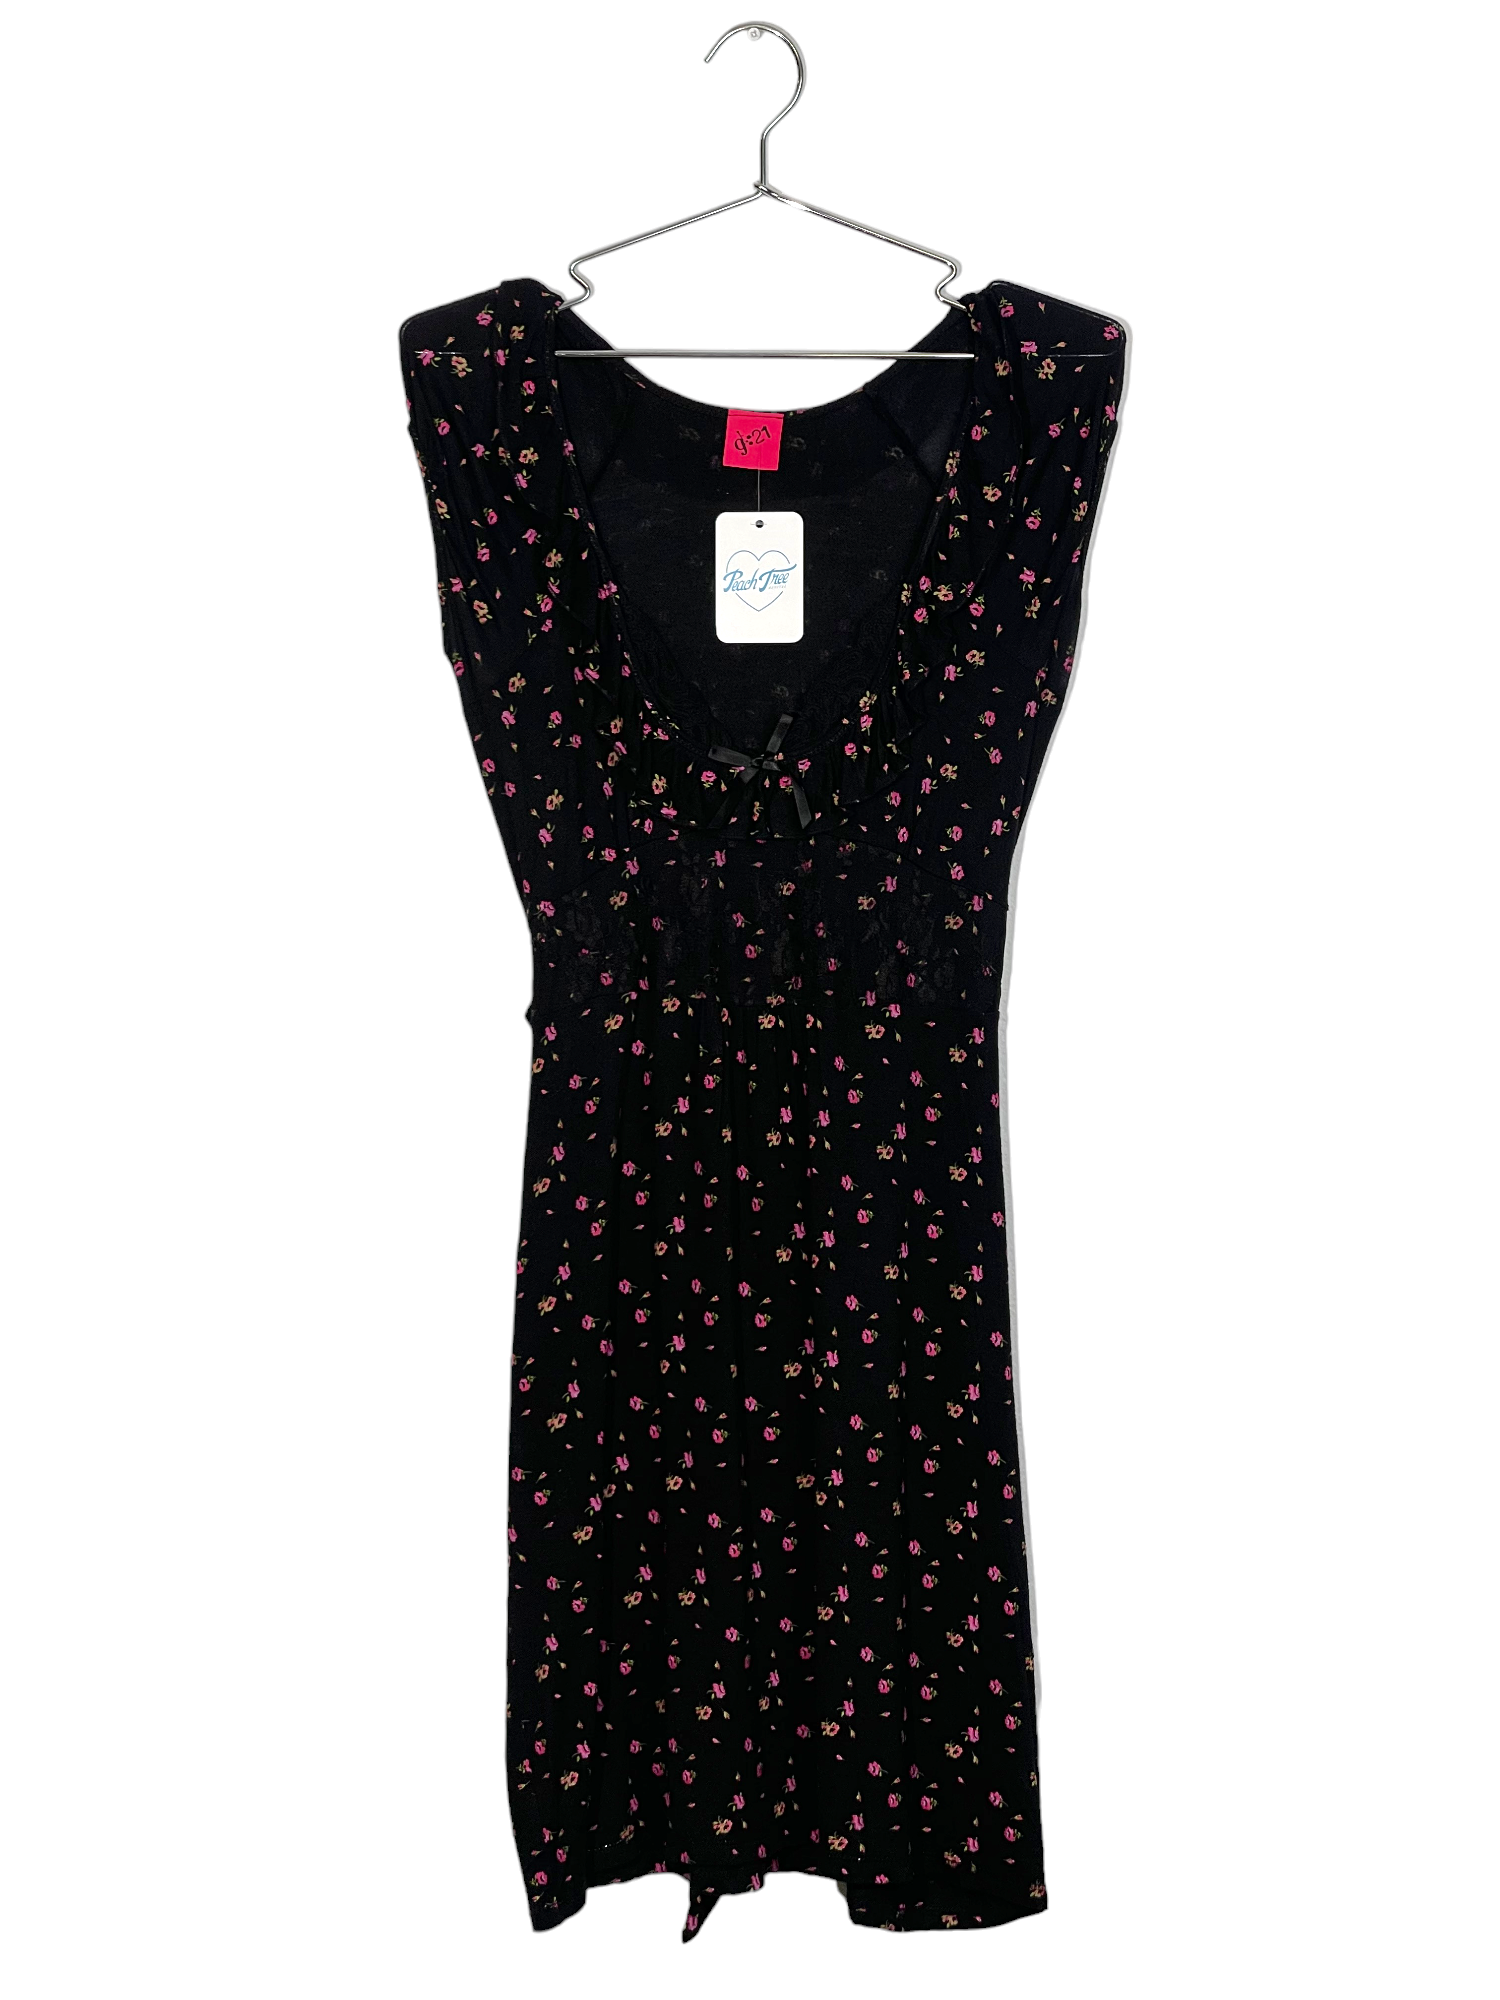 g:21 Pink And Black Floral Dress